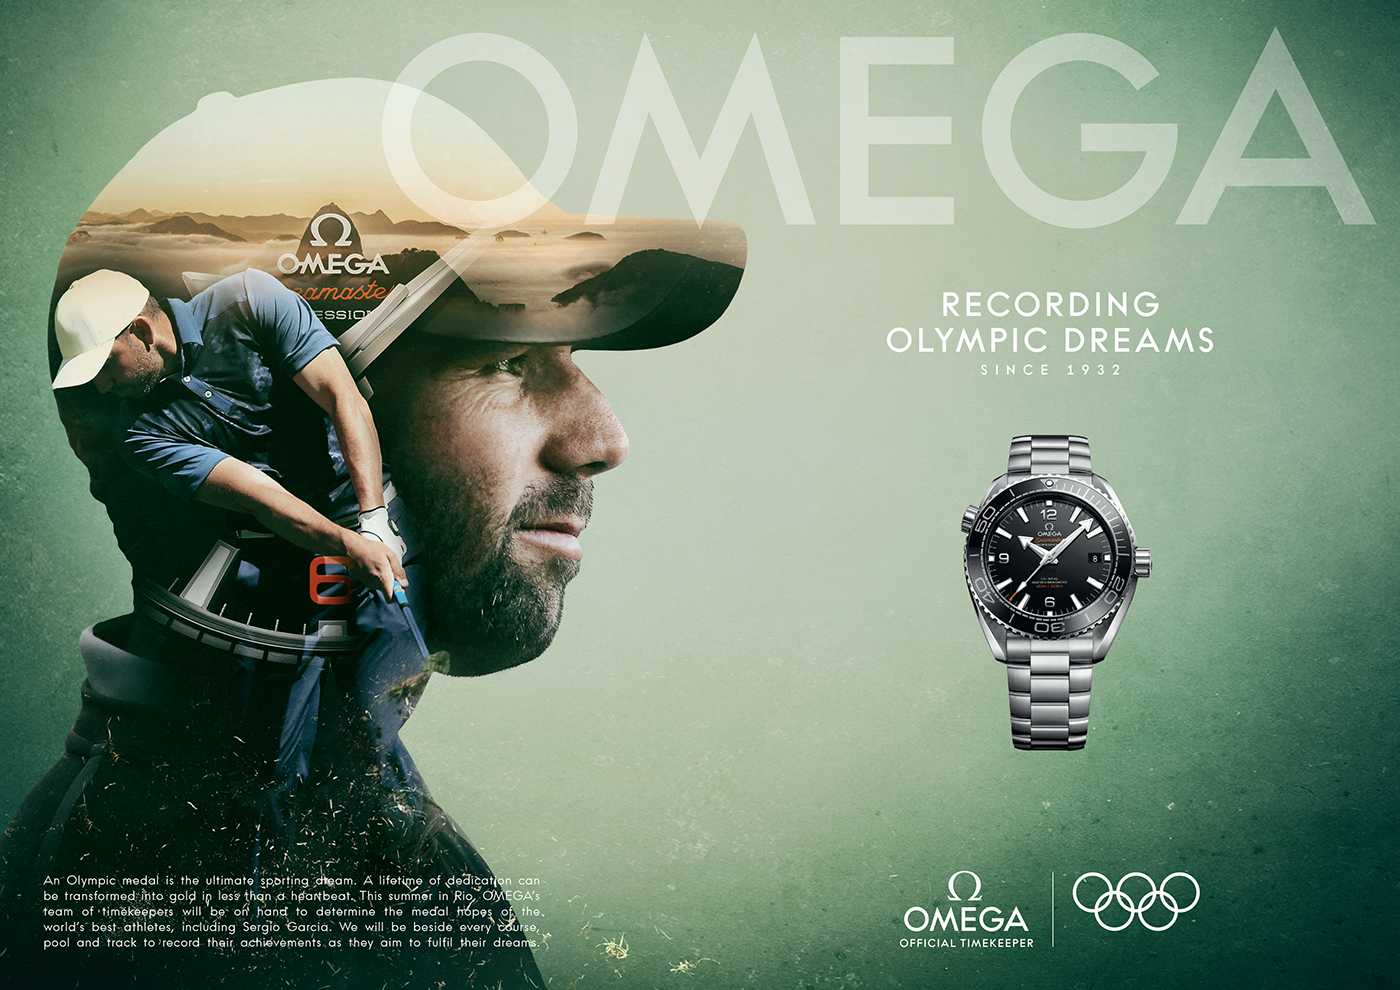 Omega double exposure multiple exposure Olympics rio Michael Phelps jessica ennis-hill chad le clos